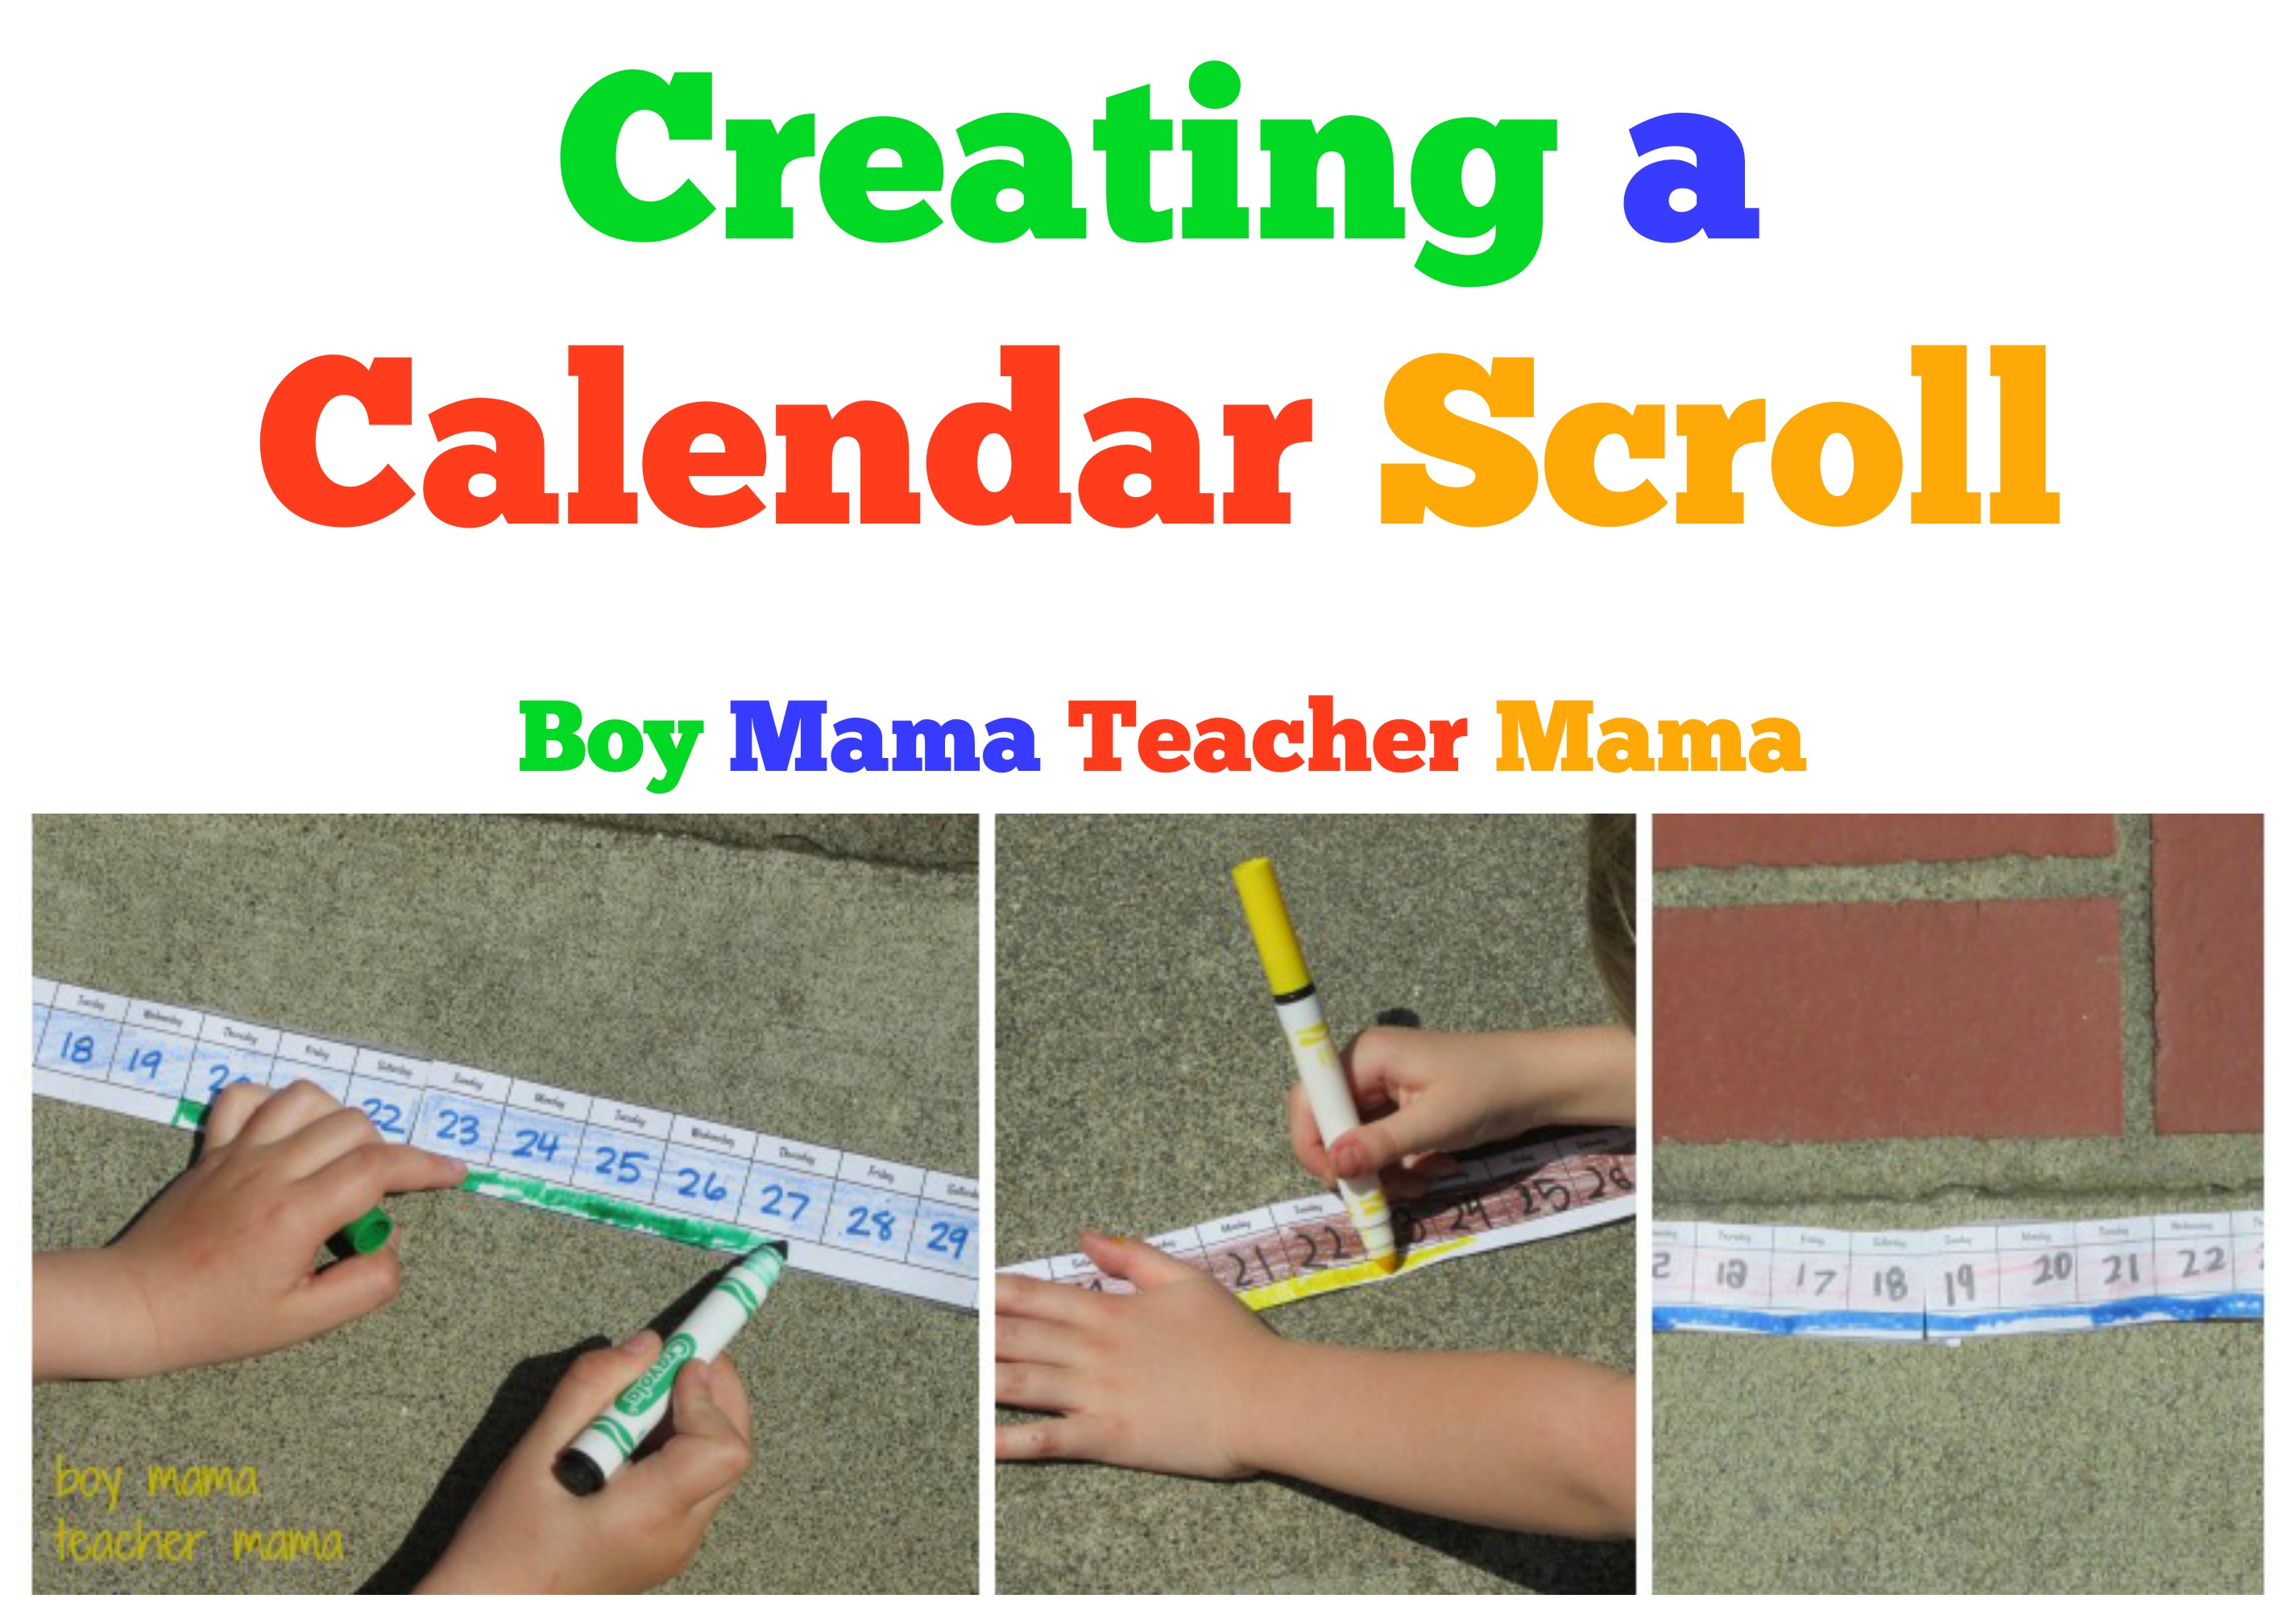 https://boymamateachermama.com/wp-content/uploads/2014/05/Boy-Mama-Teacher-Mama-Creating-a-Calendar-Scroll.jpg